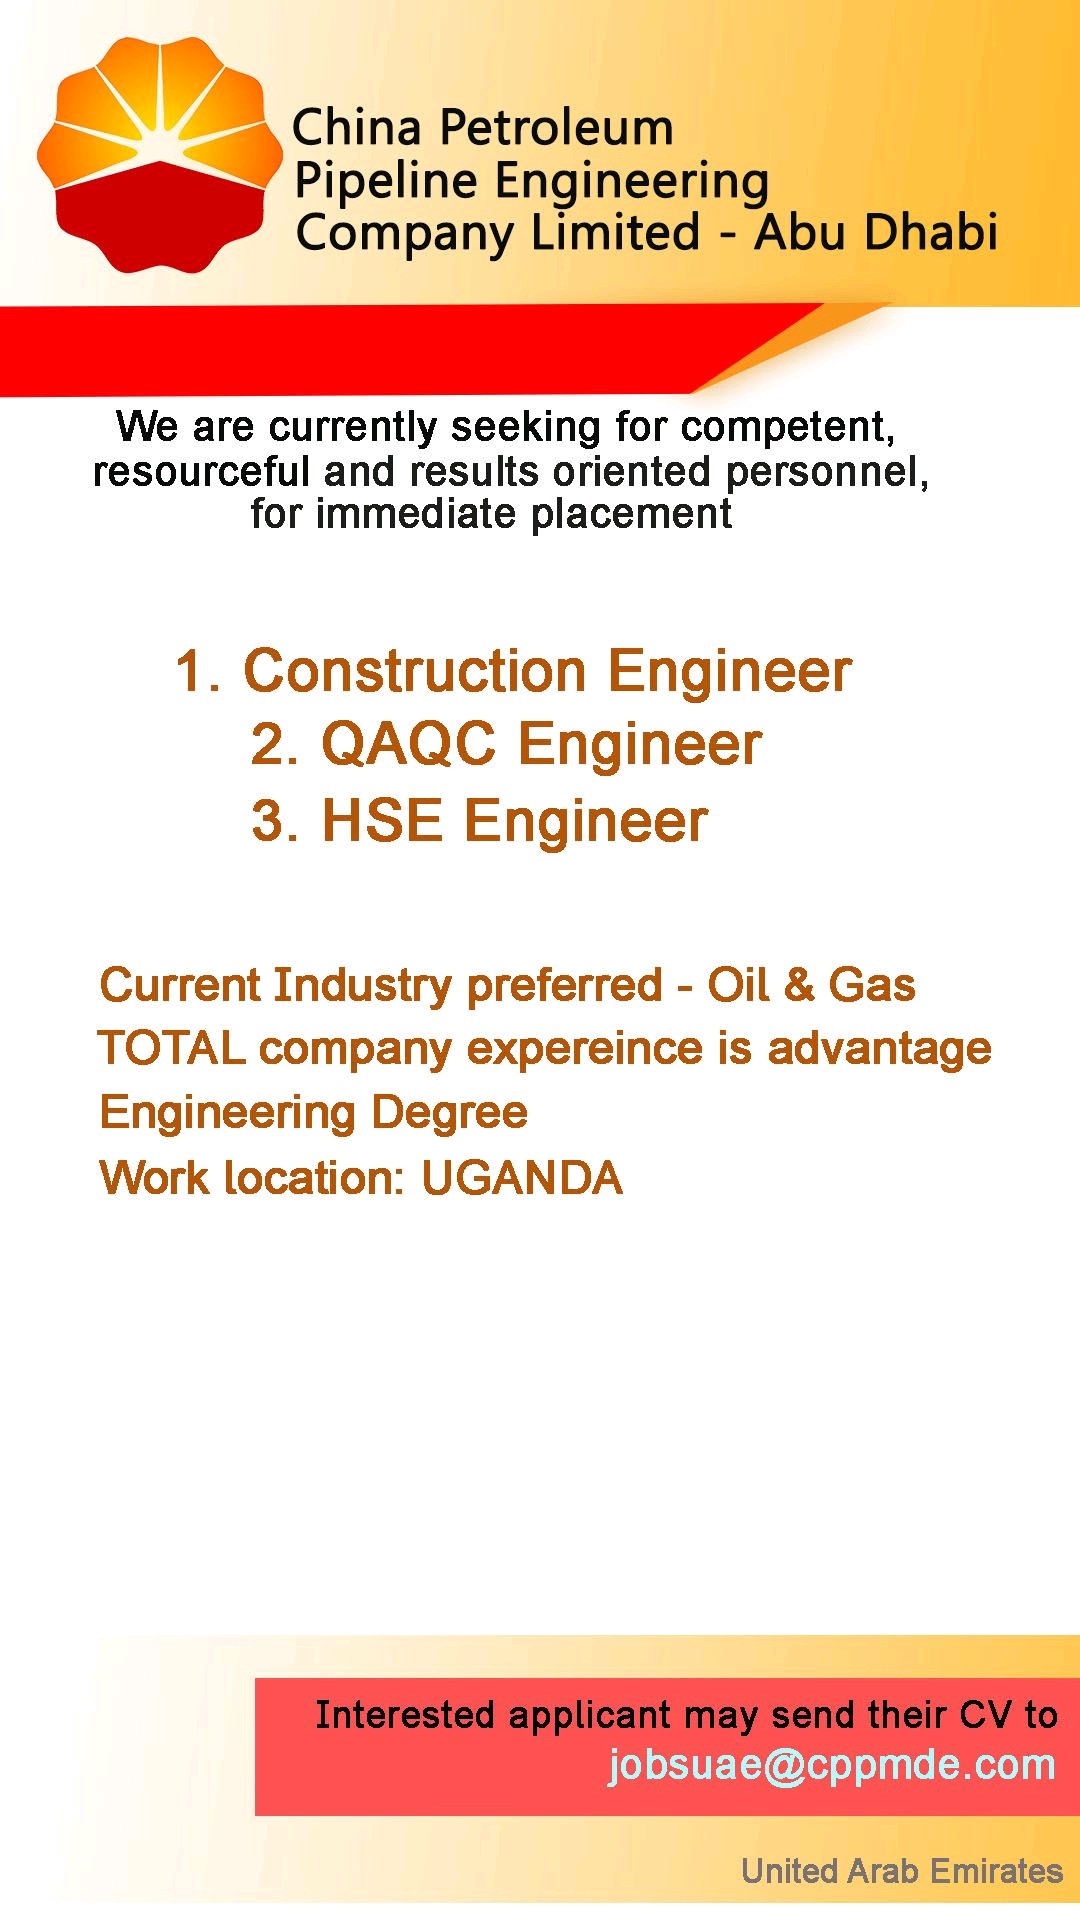 Construction, QAQC & HSE Engineer Jobs